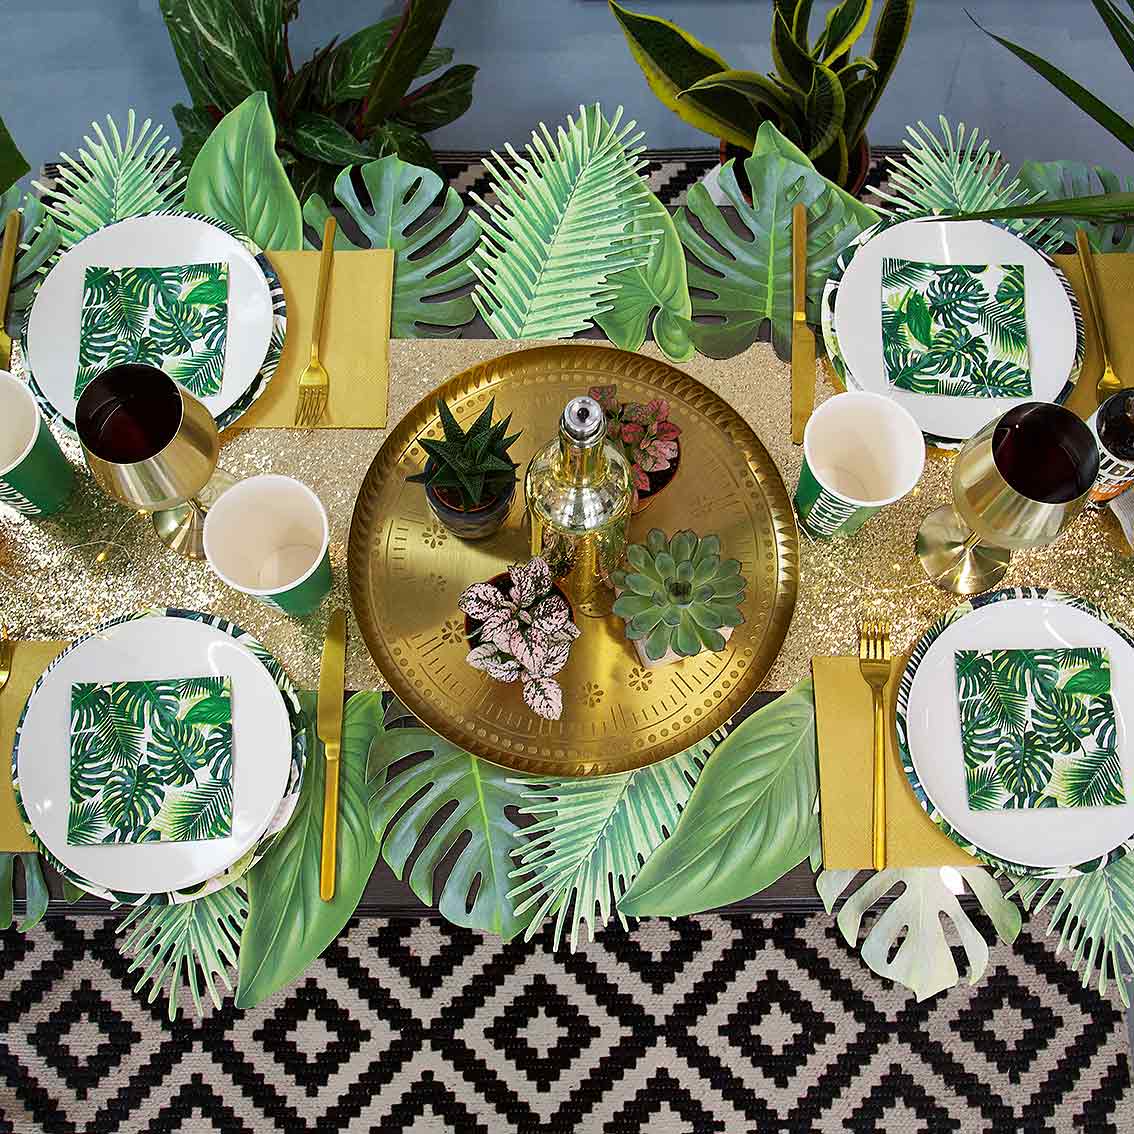 Weddingstar Decorative Paper Table Runner - Gold Confetti